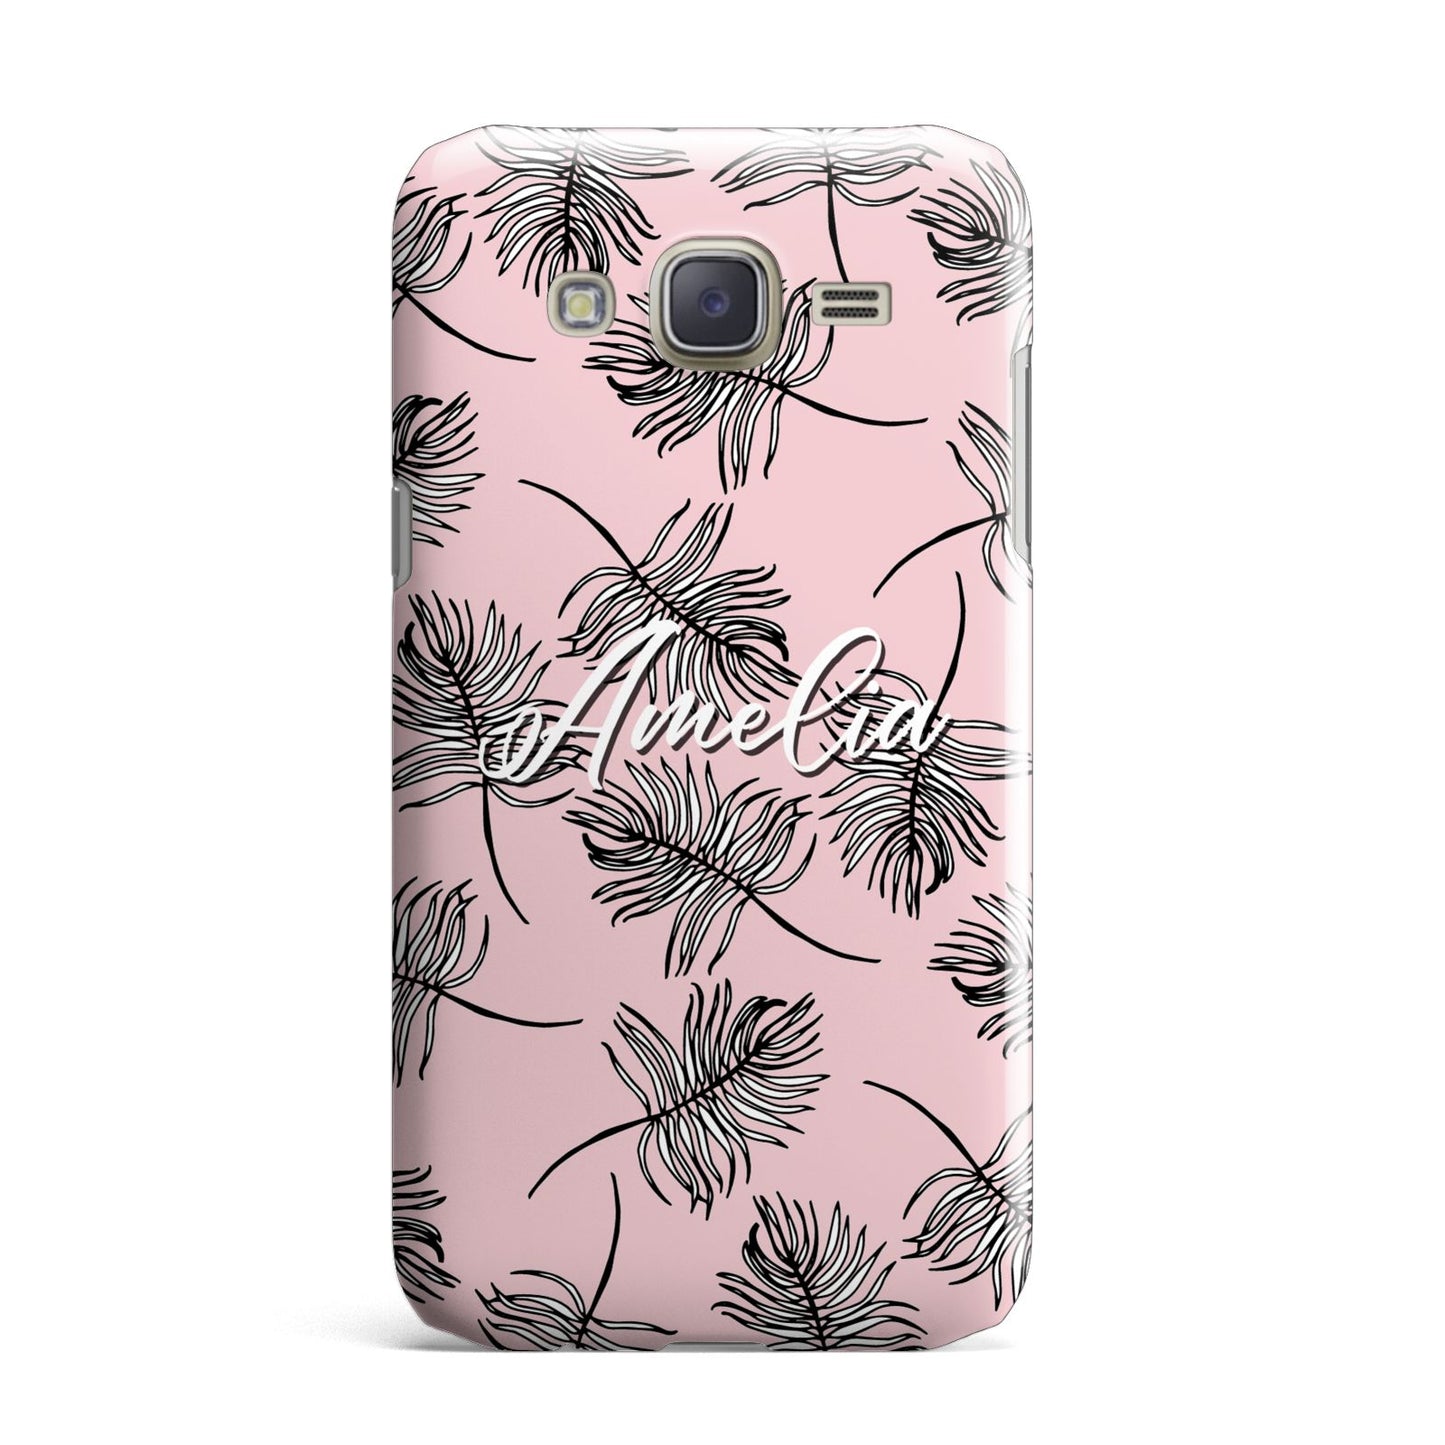 Personalised Pink Monochrome Tropical Leaf Samsung Galaxy J7 Case